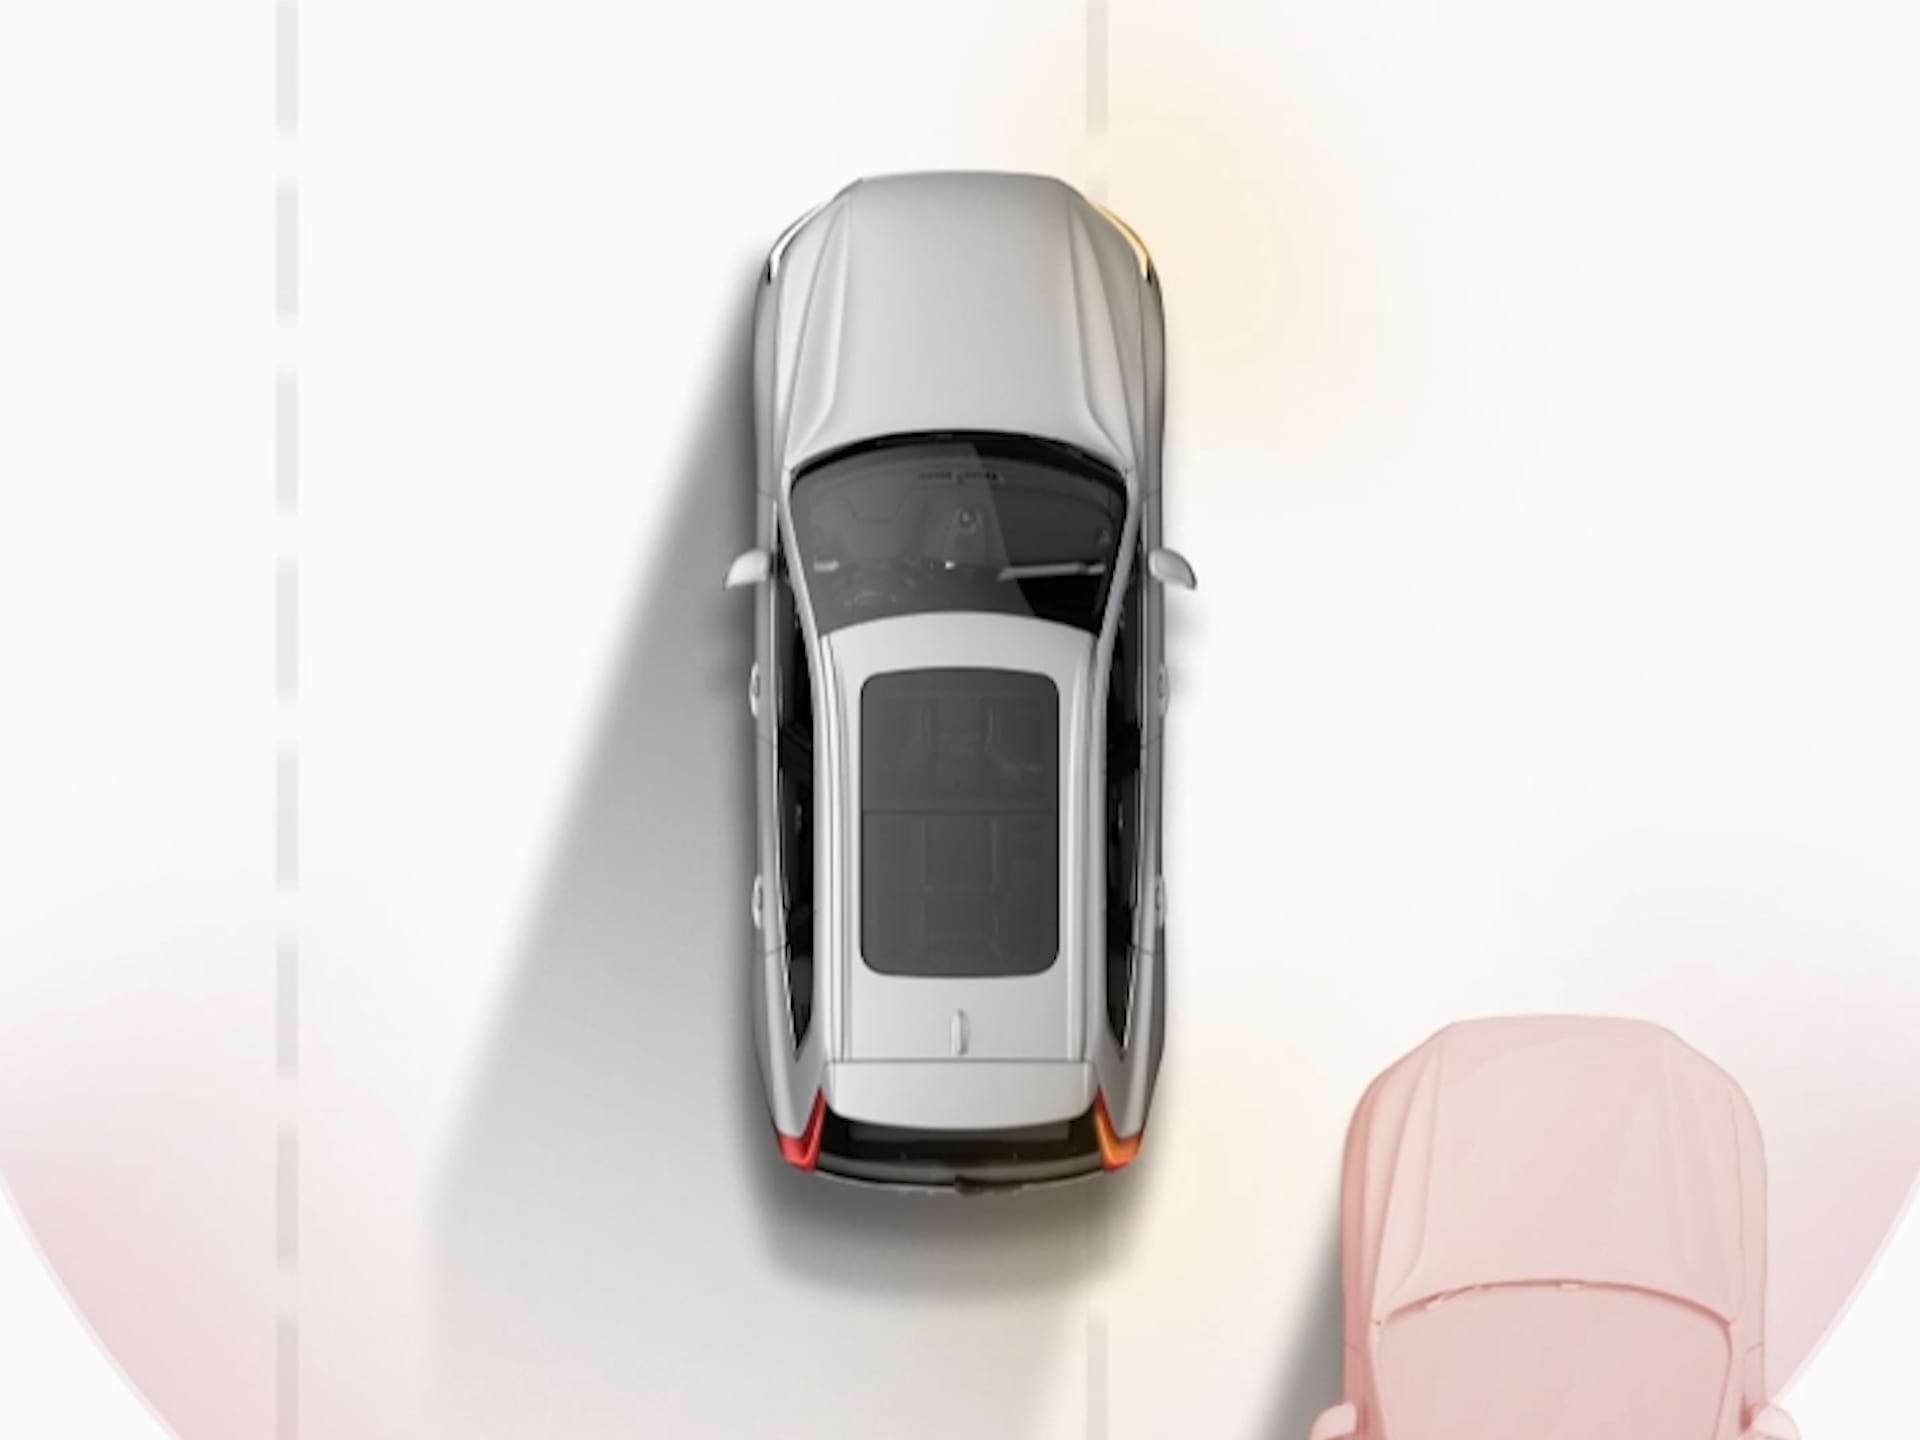 Ilustrovana slika pogleda odozgo na vožnju Volvo automobila pored drugih vozila.